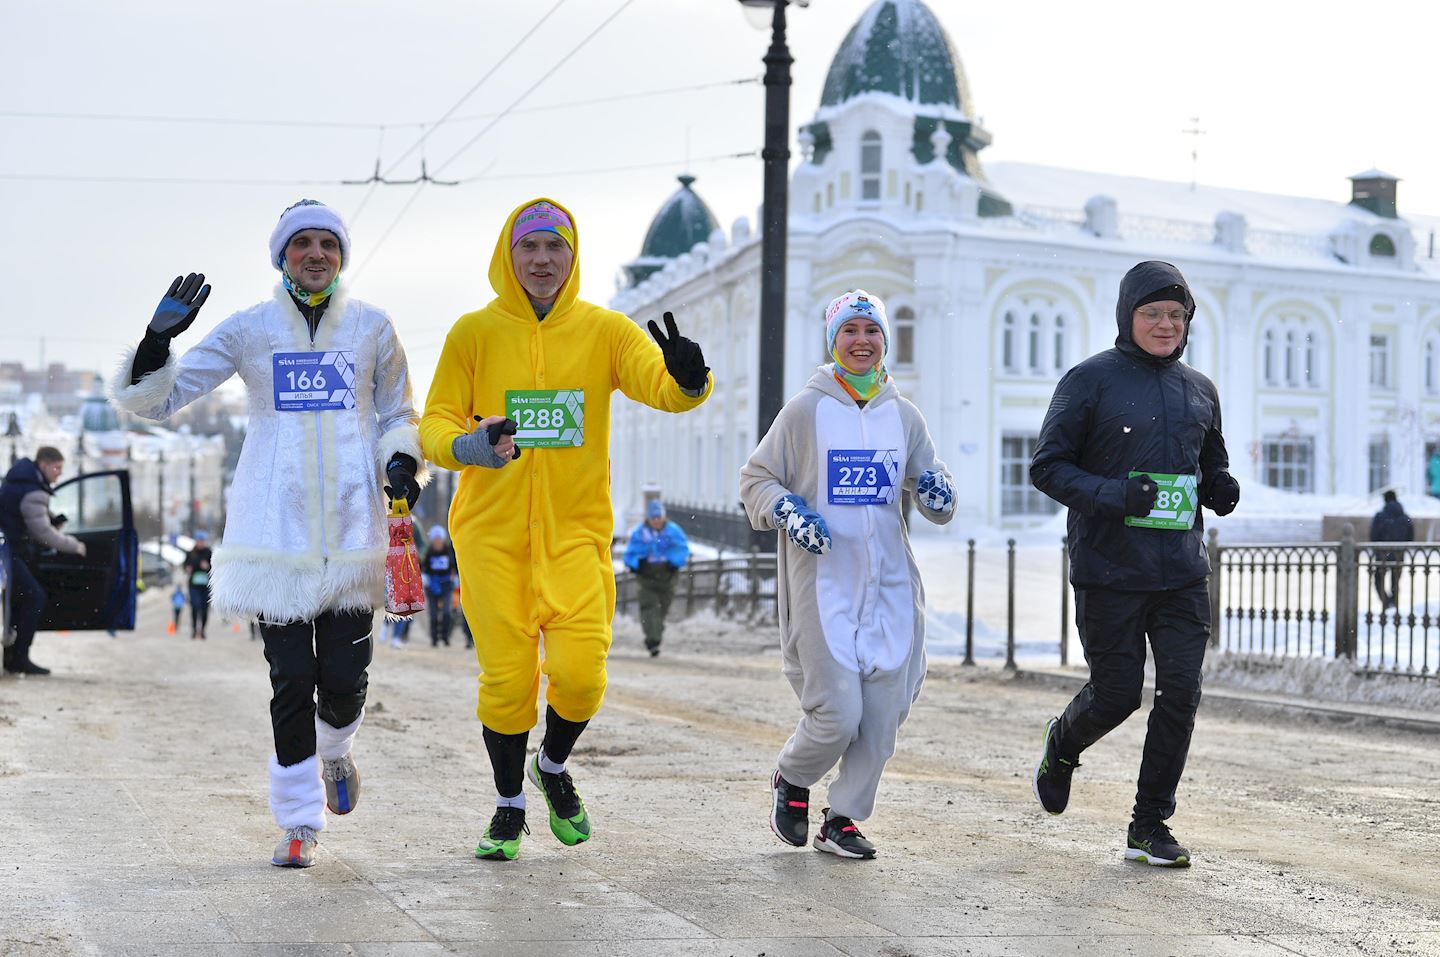 siberian ice half marathon